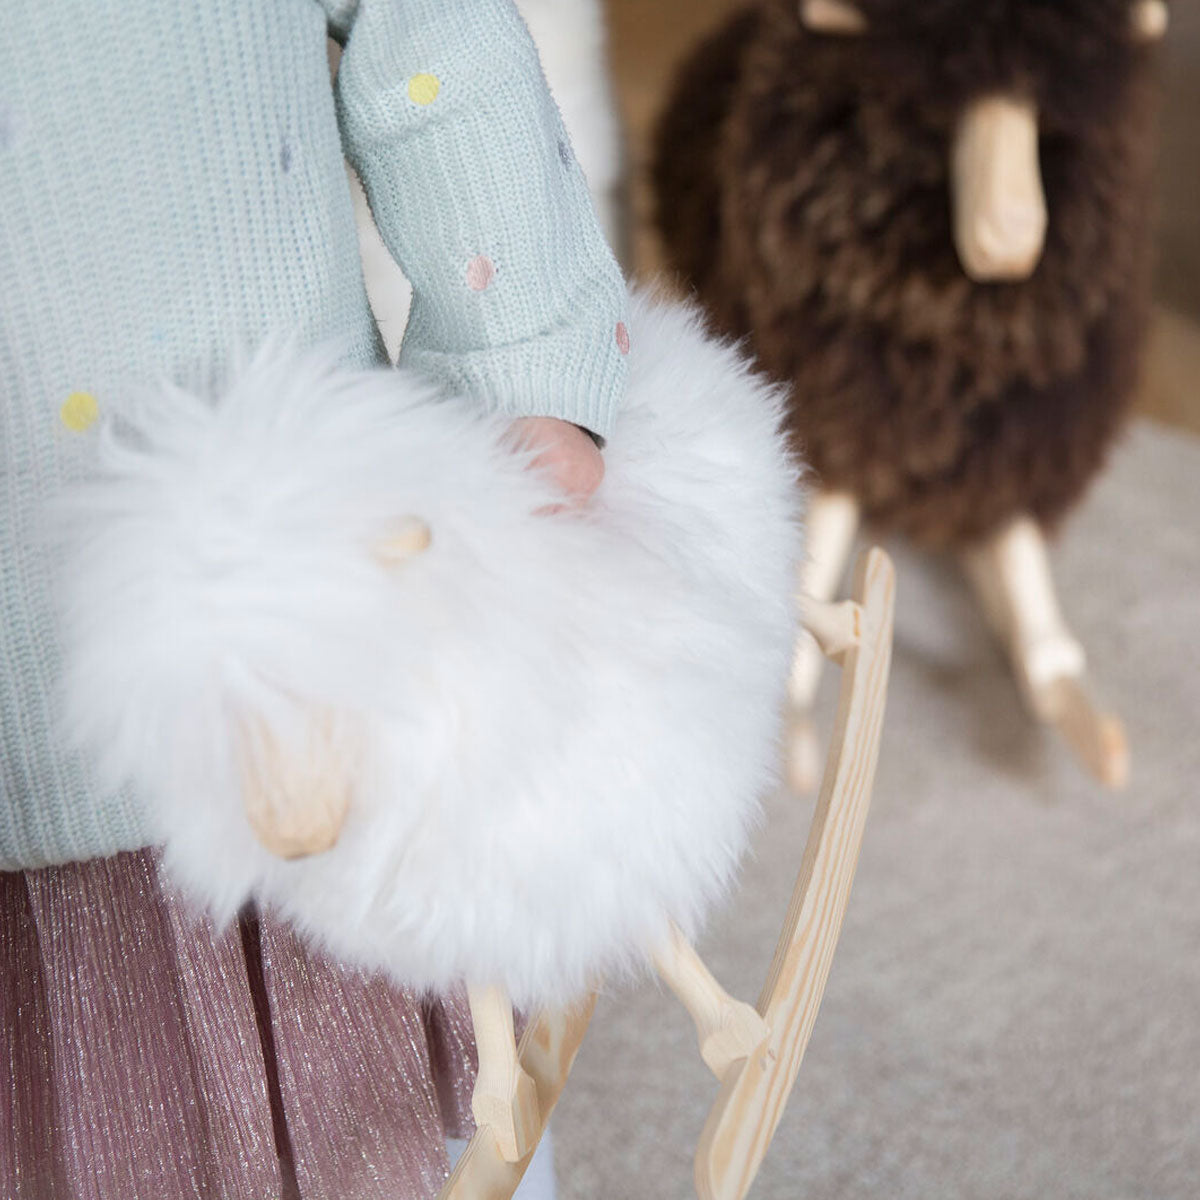 The Rocking Lamb │ Povl Kjer Design │ Made in Denmark │ Natural Brown Long Wool │ Small